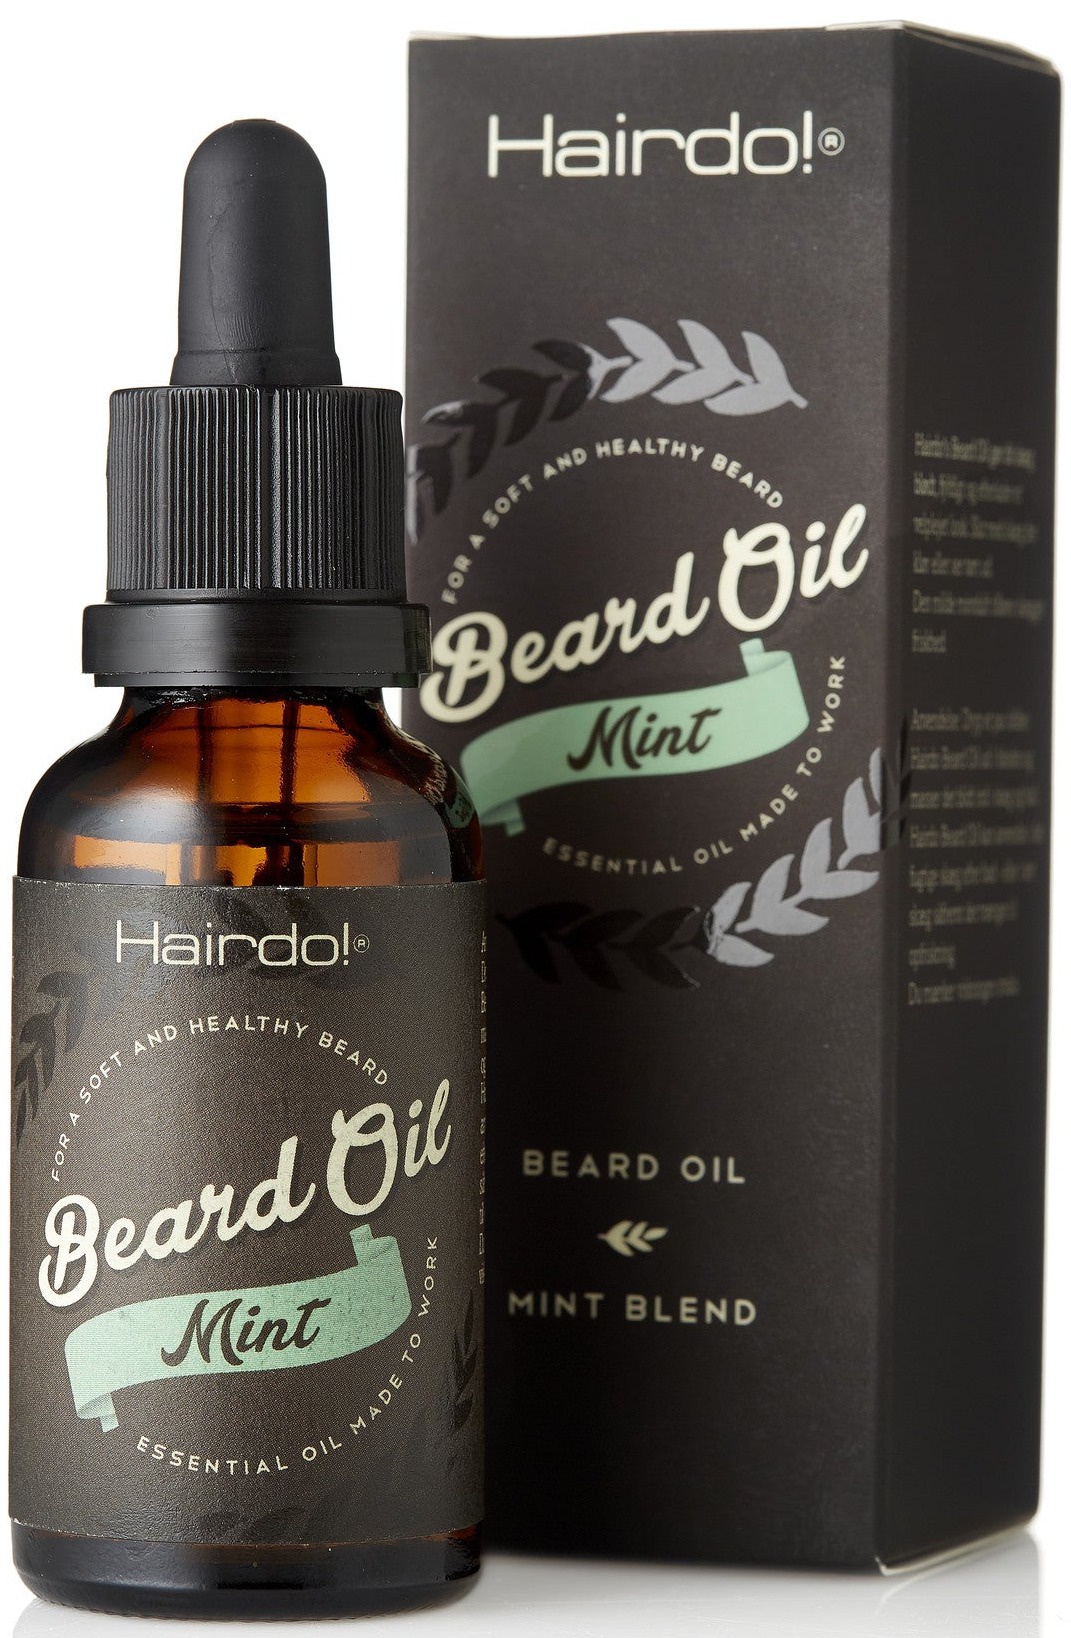 Hairdo Beard Oil